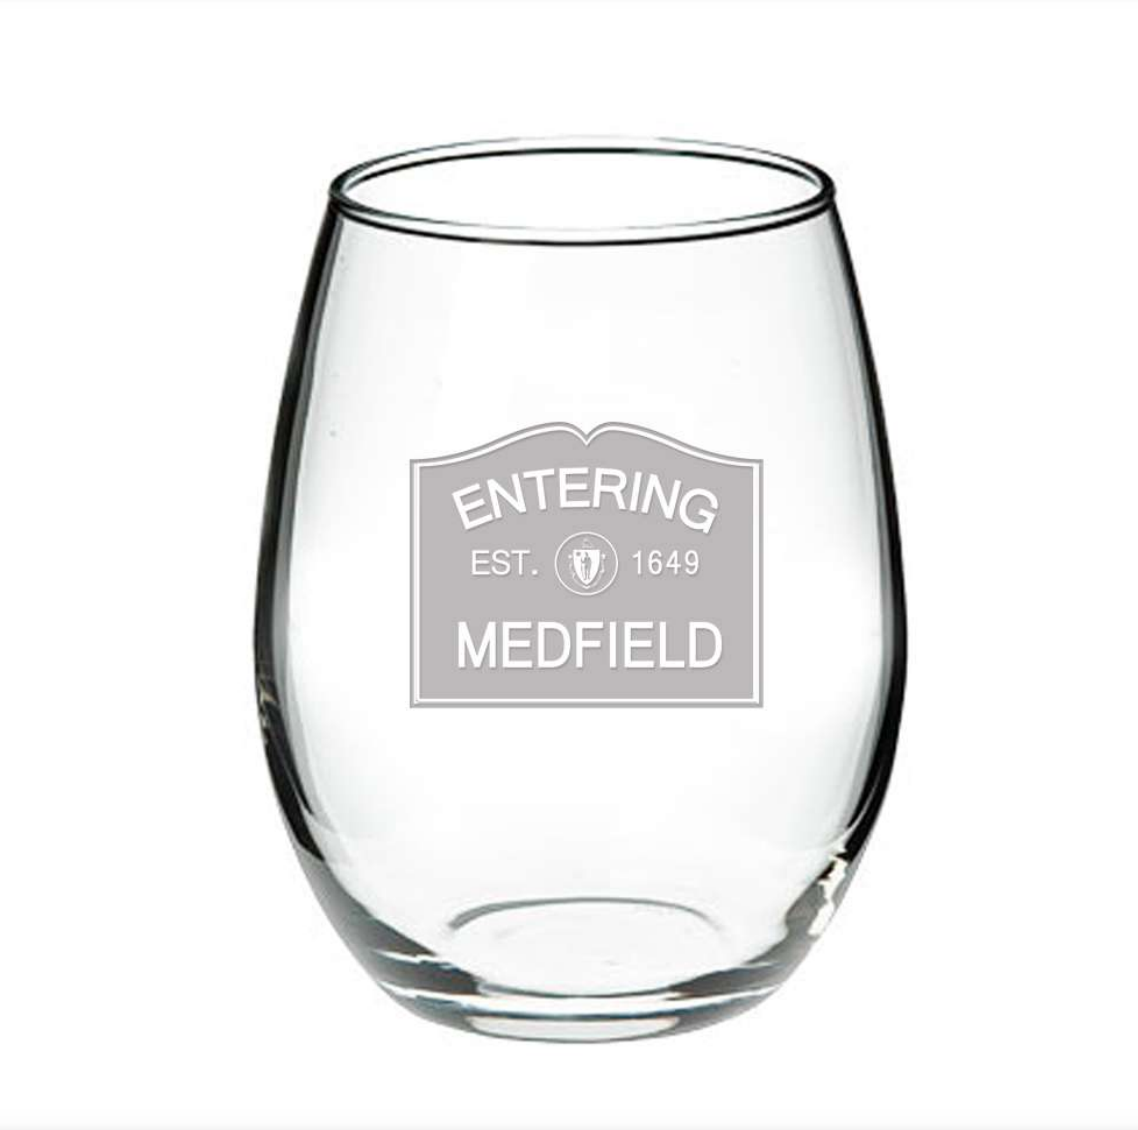 https://cdn.shoplightspeed.com/shops/621427/files/20973329/entering-medfield-1649-stemless-wine-glass.jpg